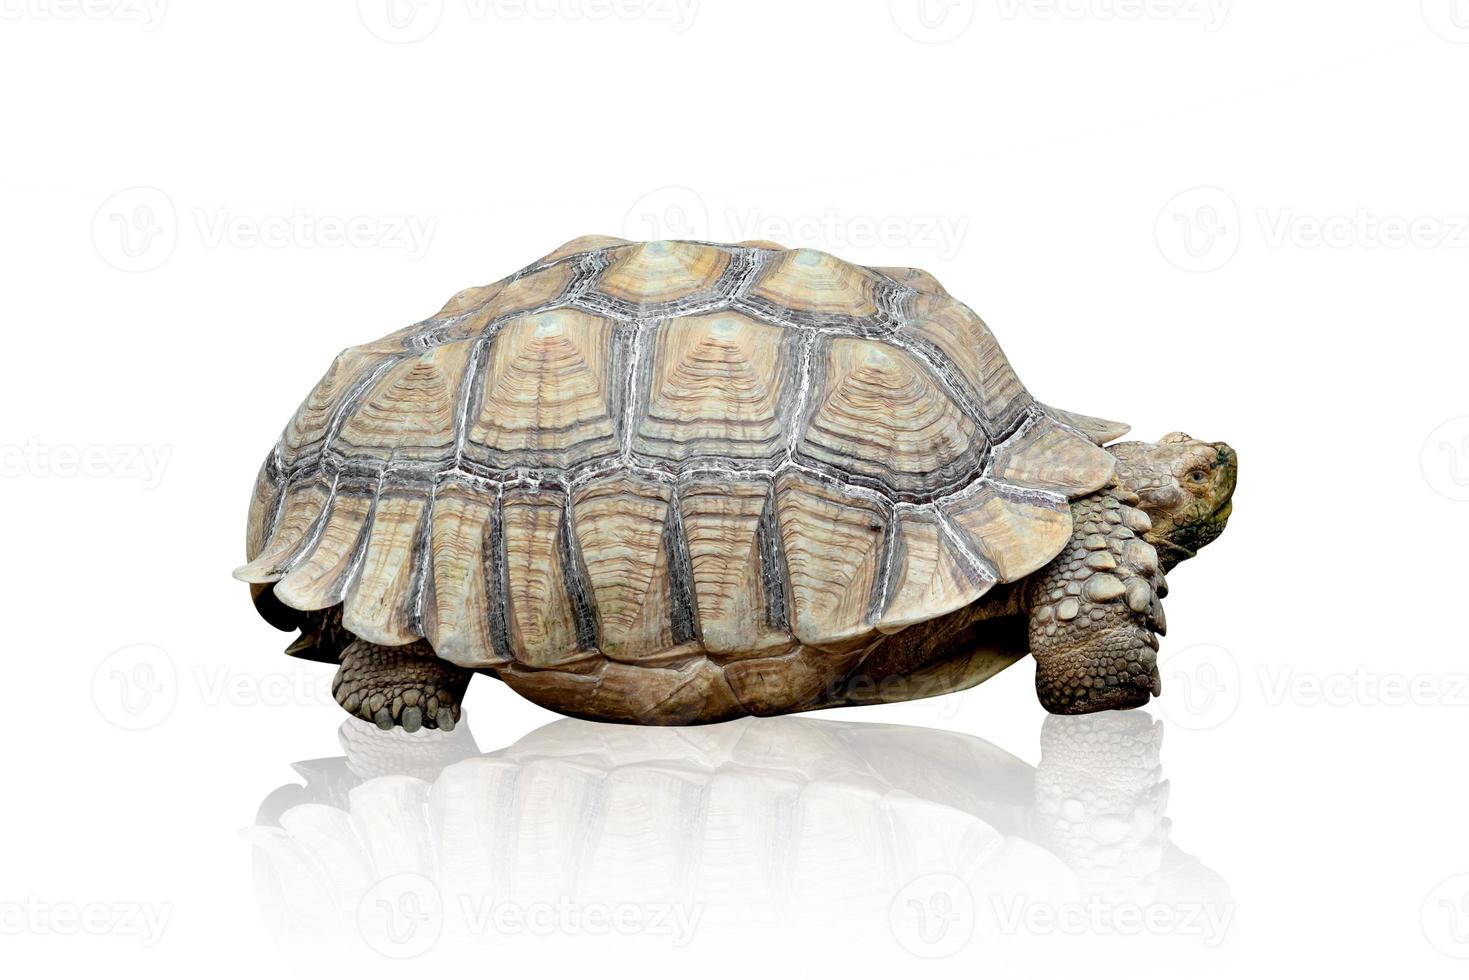 afrikansk sporrad sköldpadda eller geochelone sulcata isolerad på vit bakgrund, inklusive urklippsbana foto